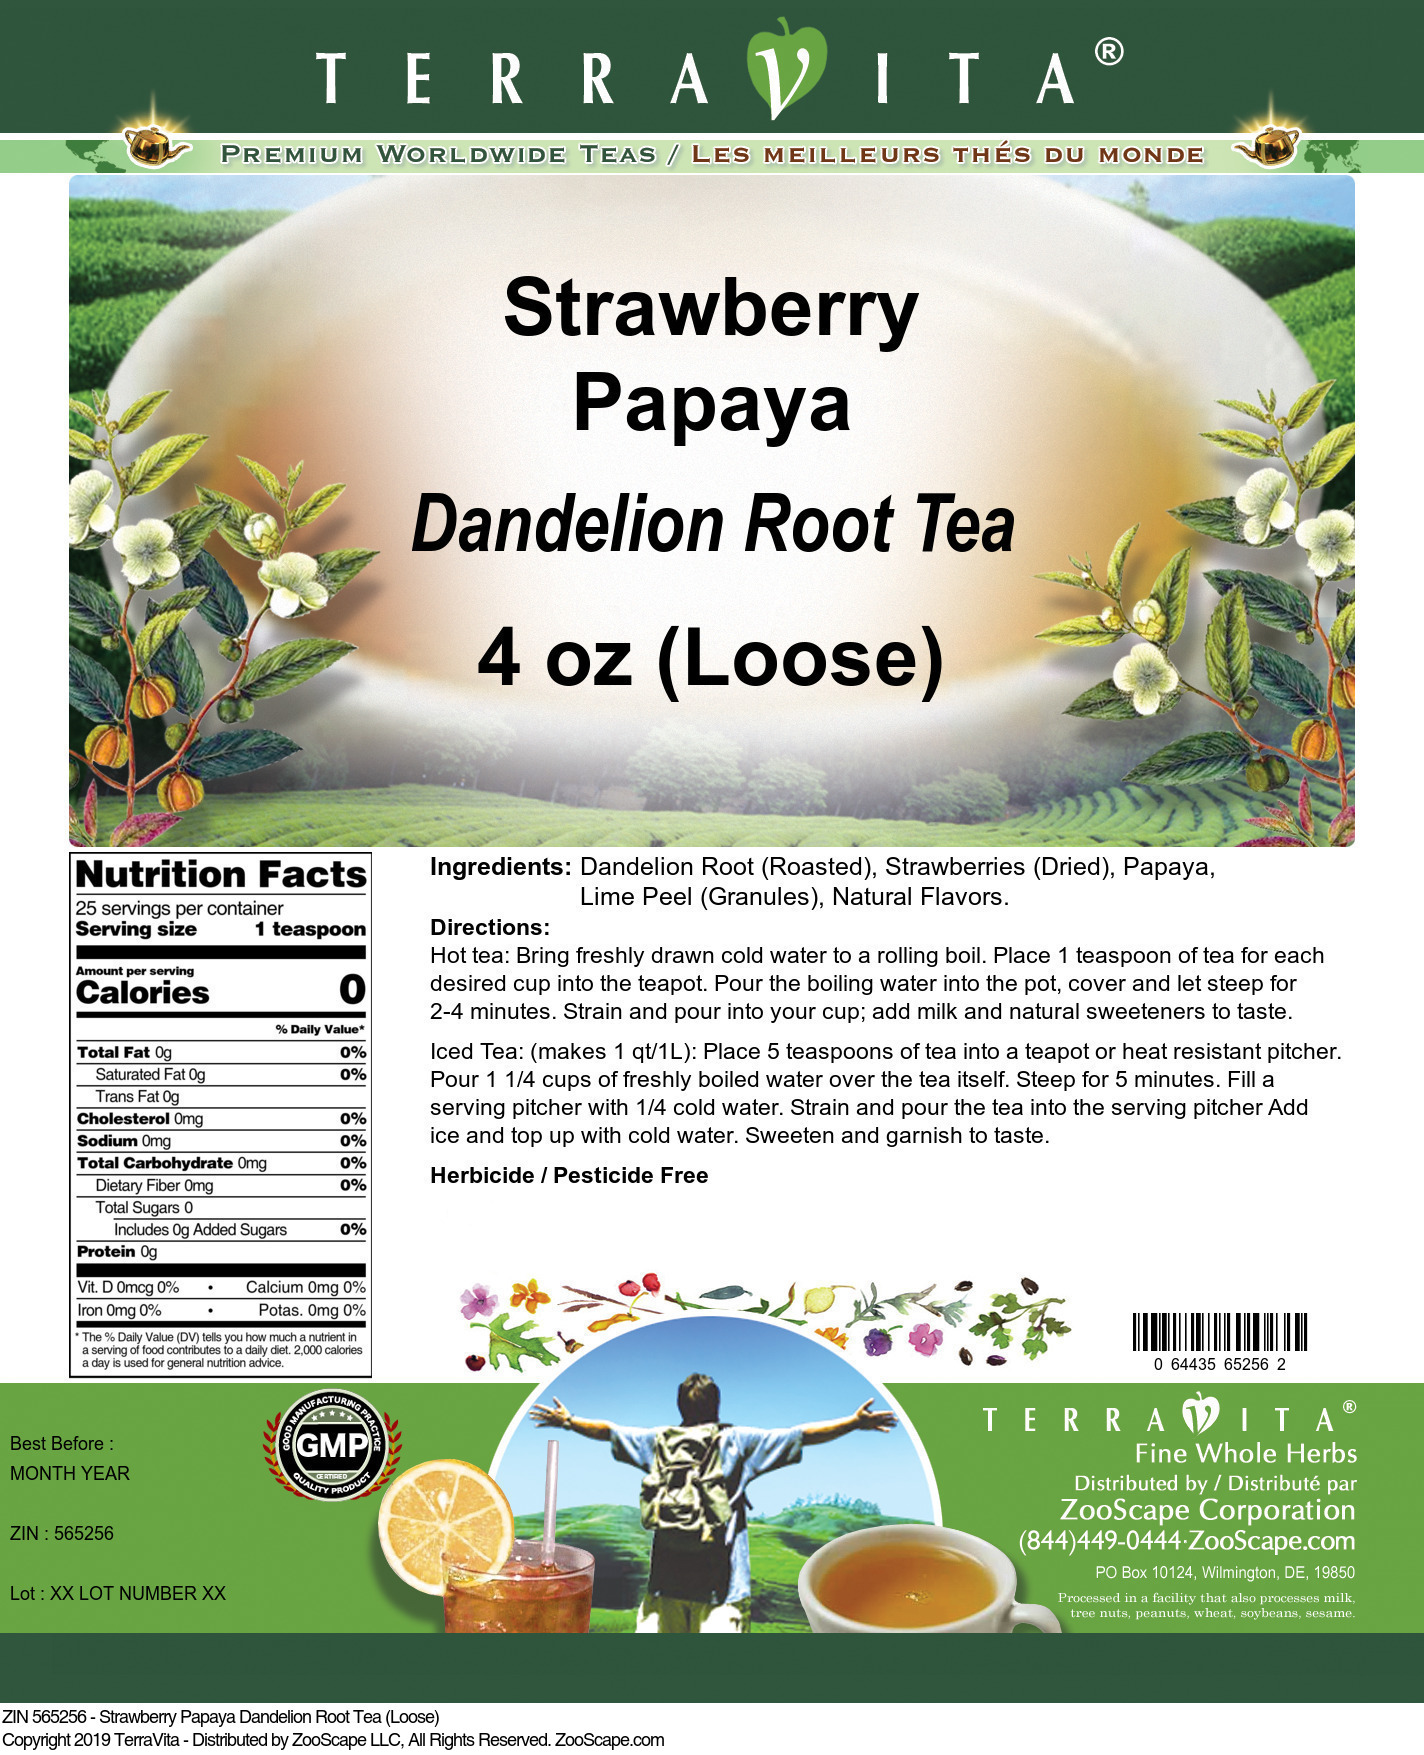 Strawberry Papaya Dandelion Root Tea (Loose) - Label